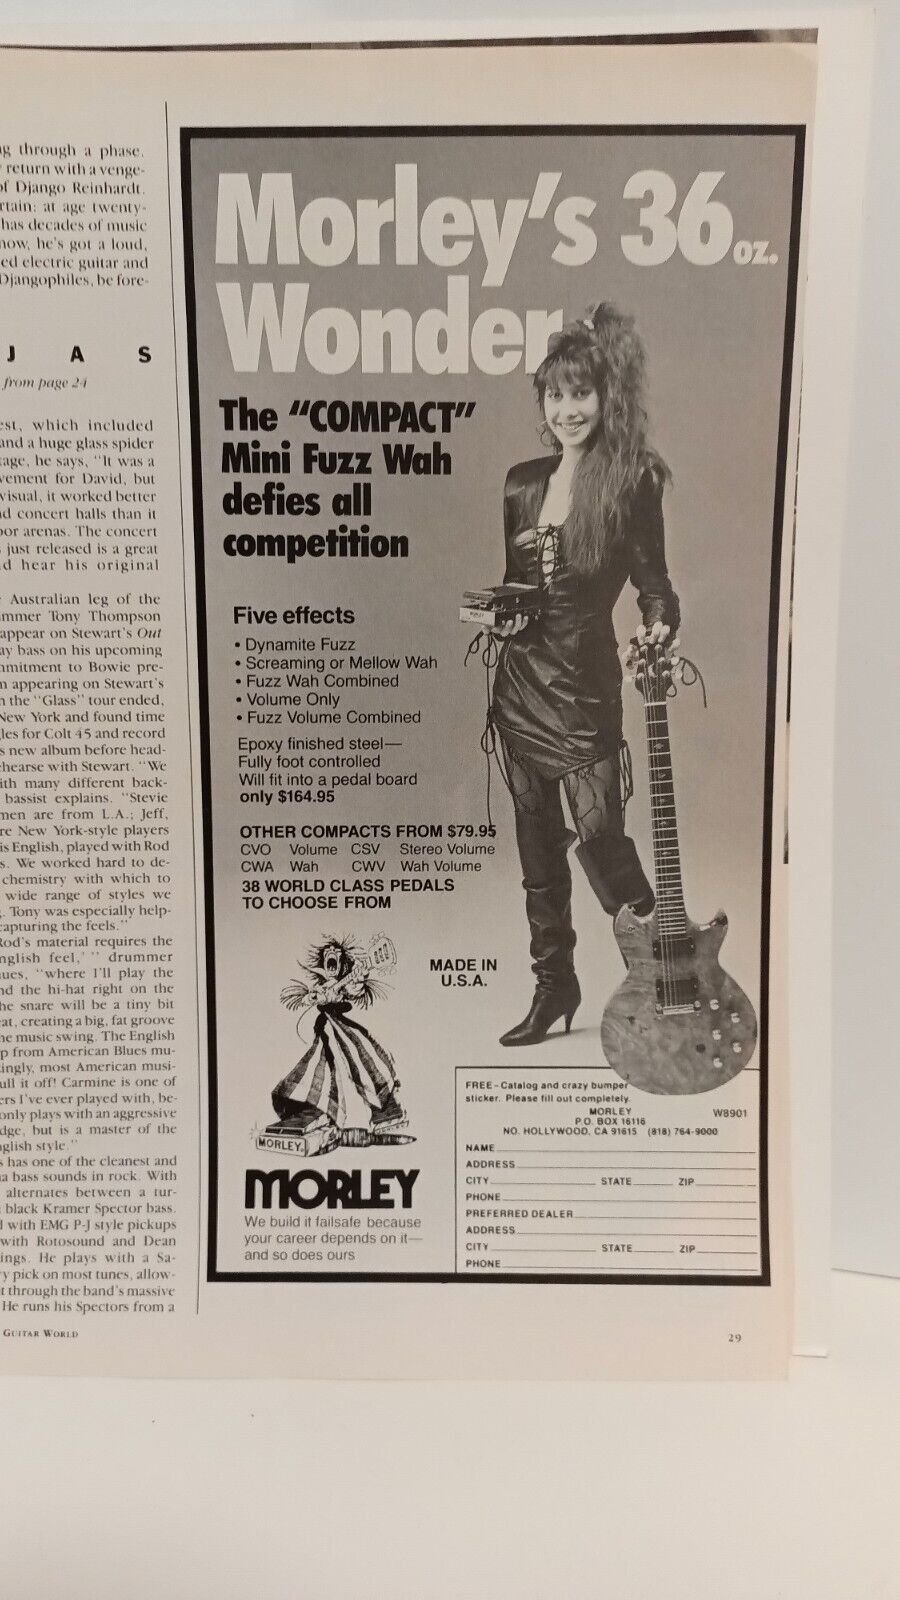 MORLEY GUITAR EFFECTS MINI FUZZ WAH  1989 - PRINT AD.  11X8.5   m1